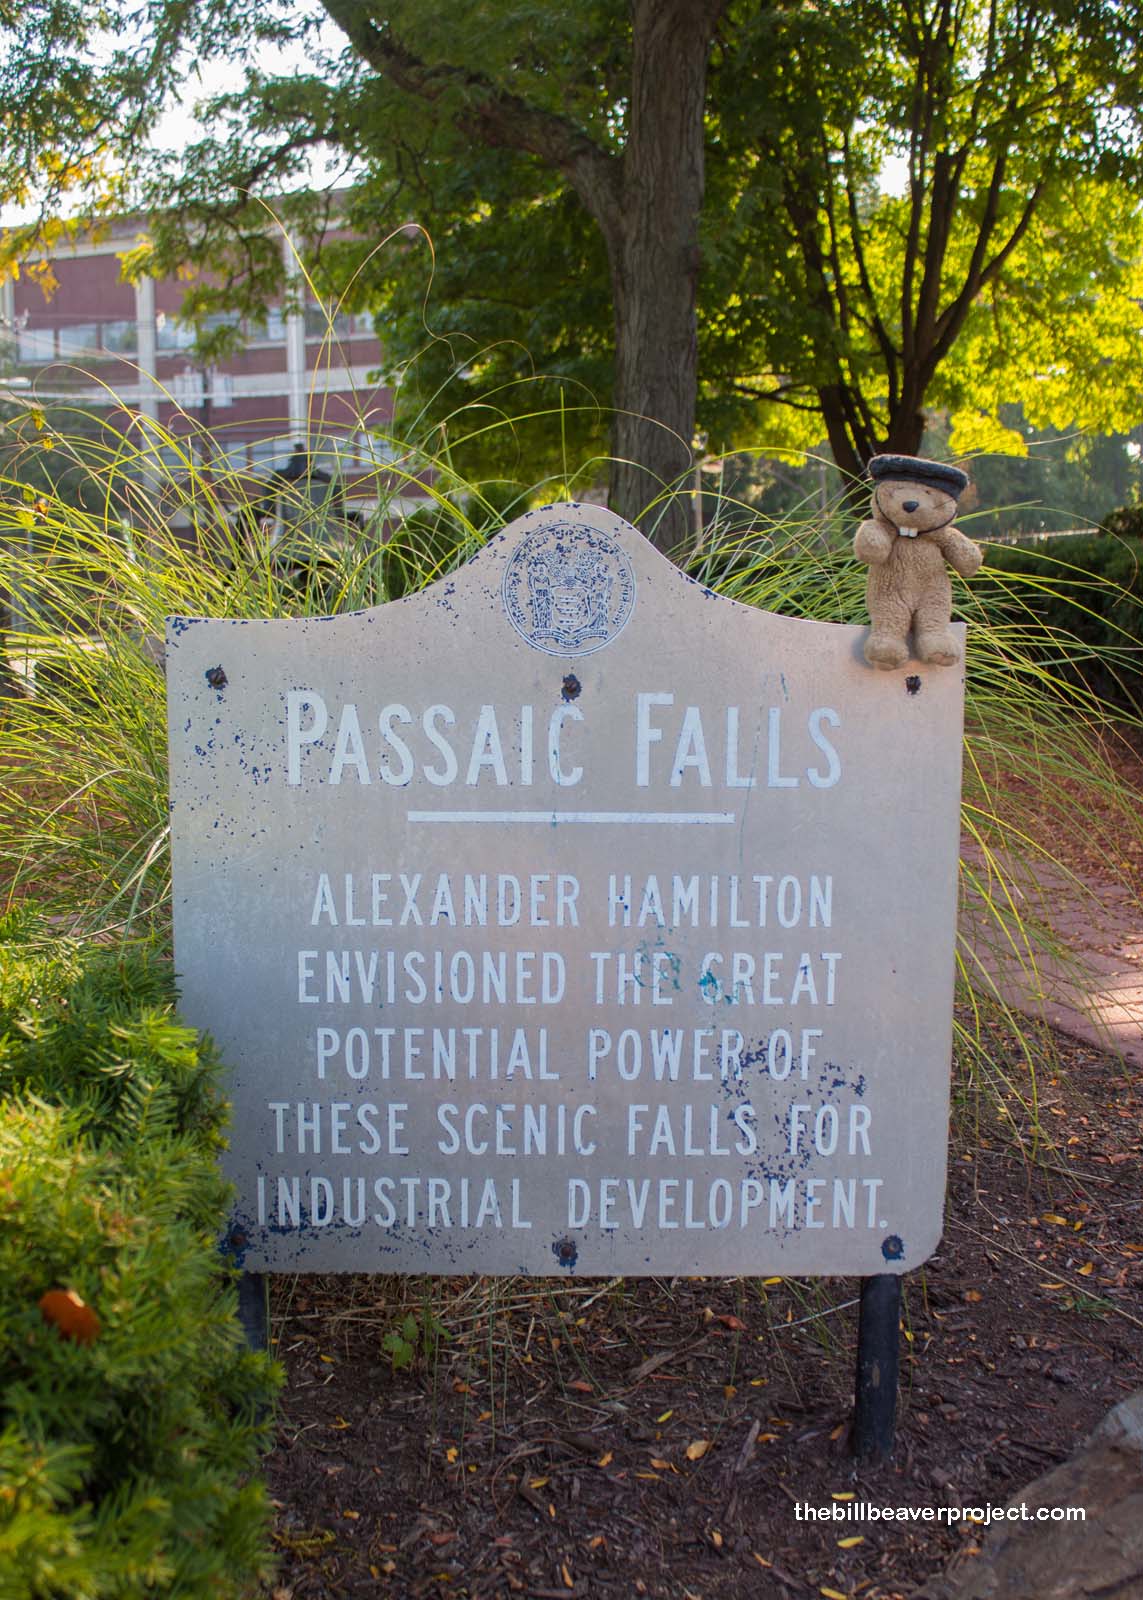 Originally called the Passaic Falls!